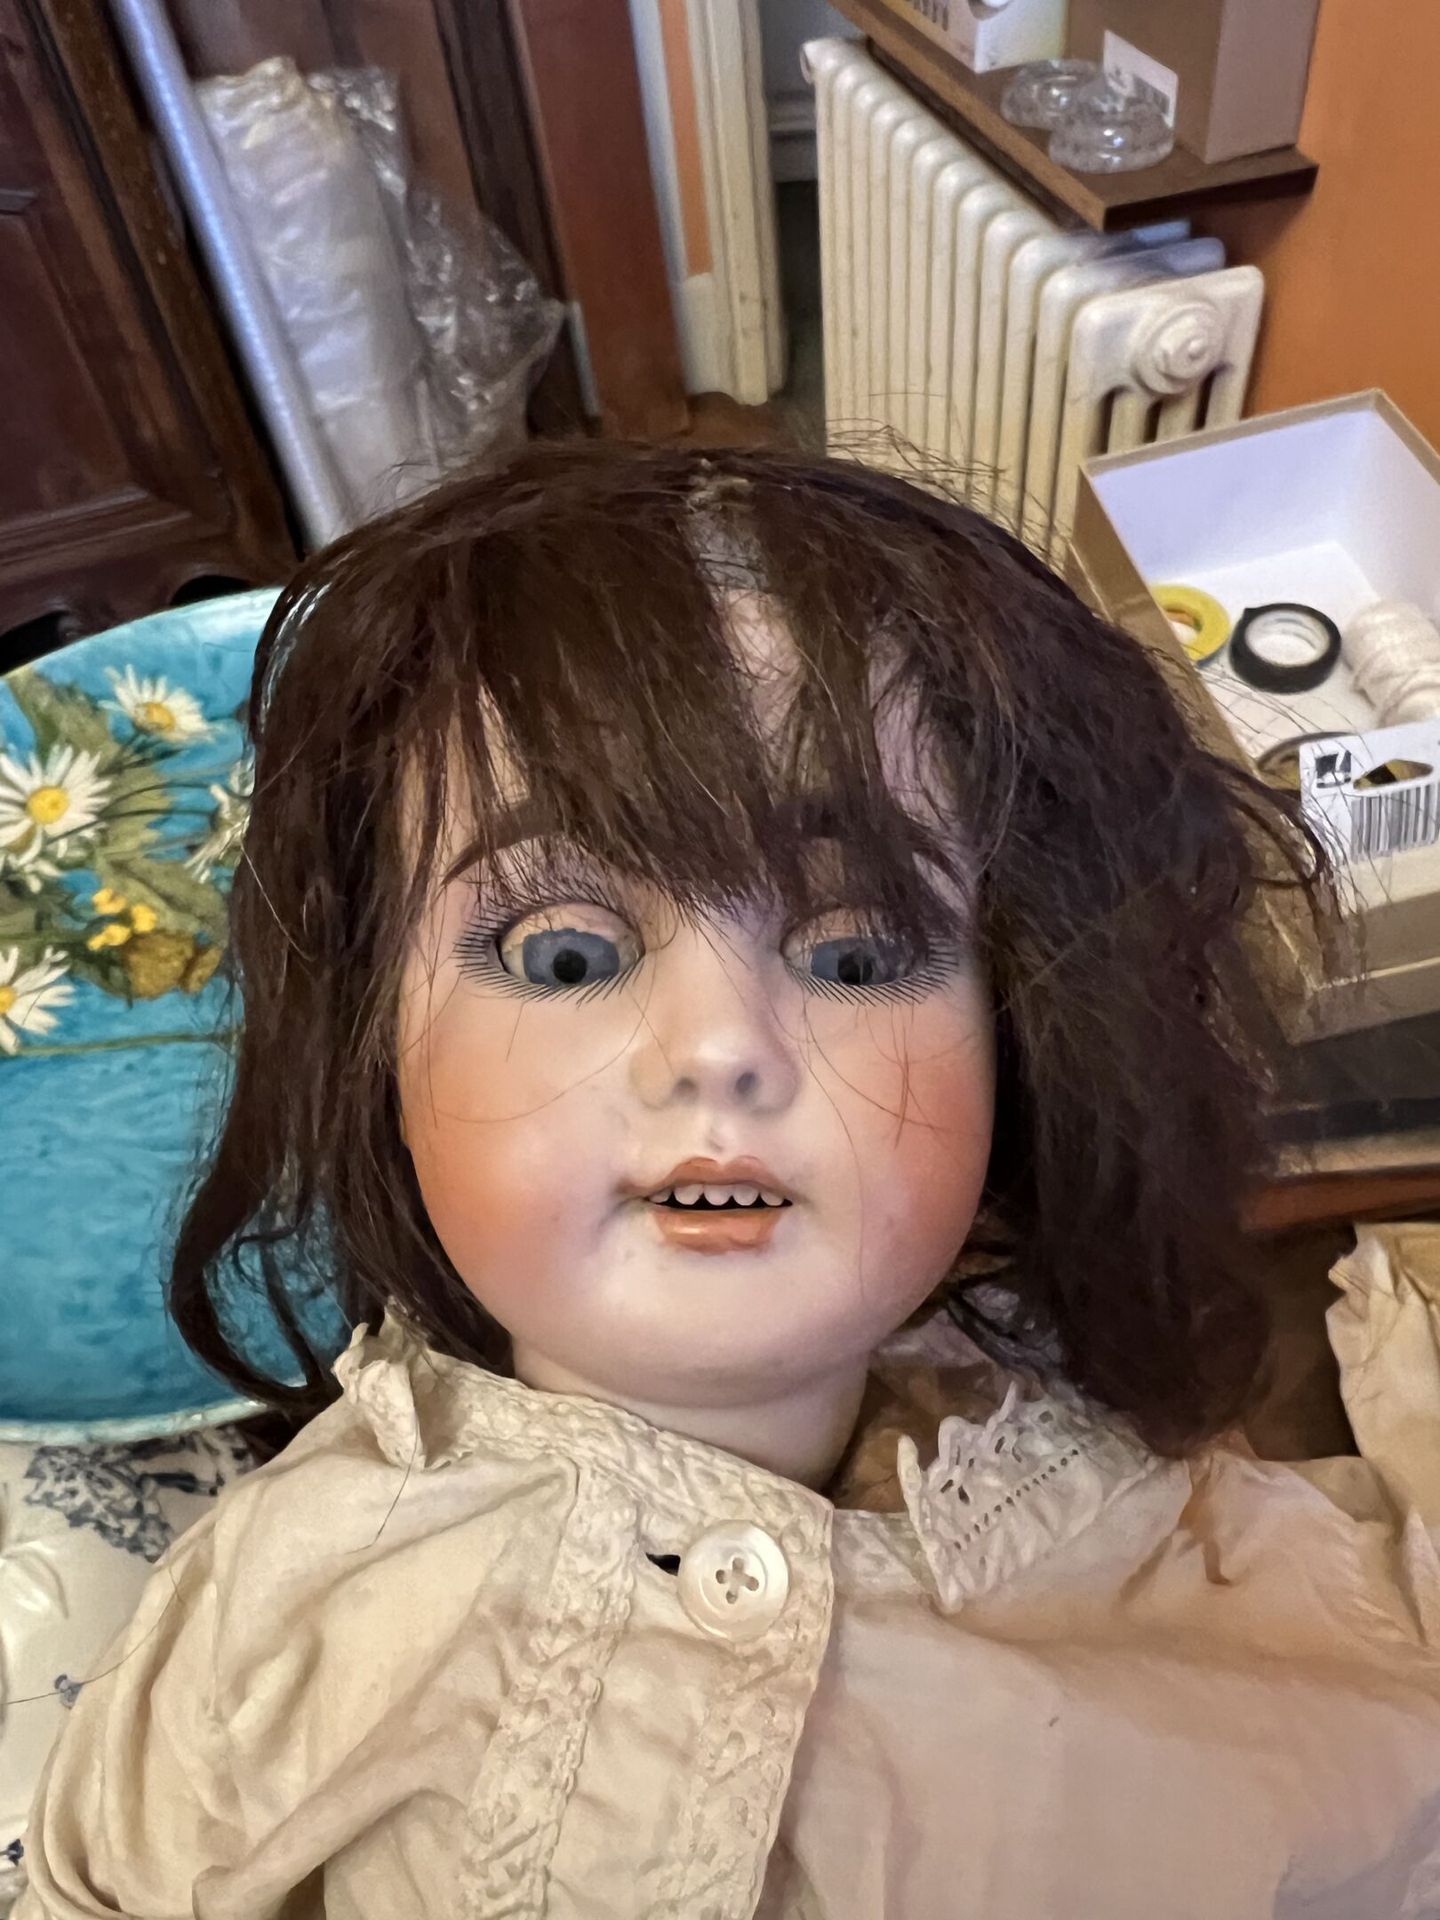 Null 德国娃娃
双人头，张嘴，标记为44-30
长度：55厘米 
一个SFBJ娃娃，头部破损，被粘在一起。